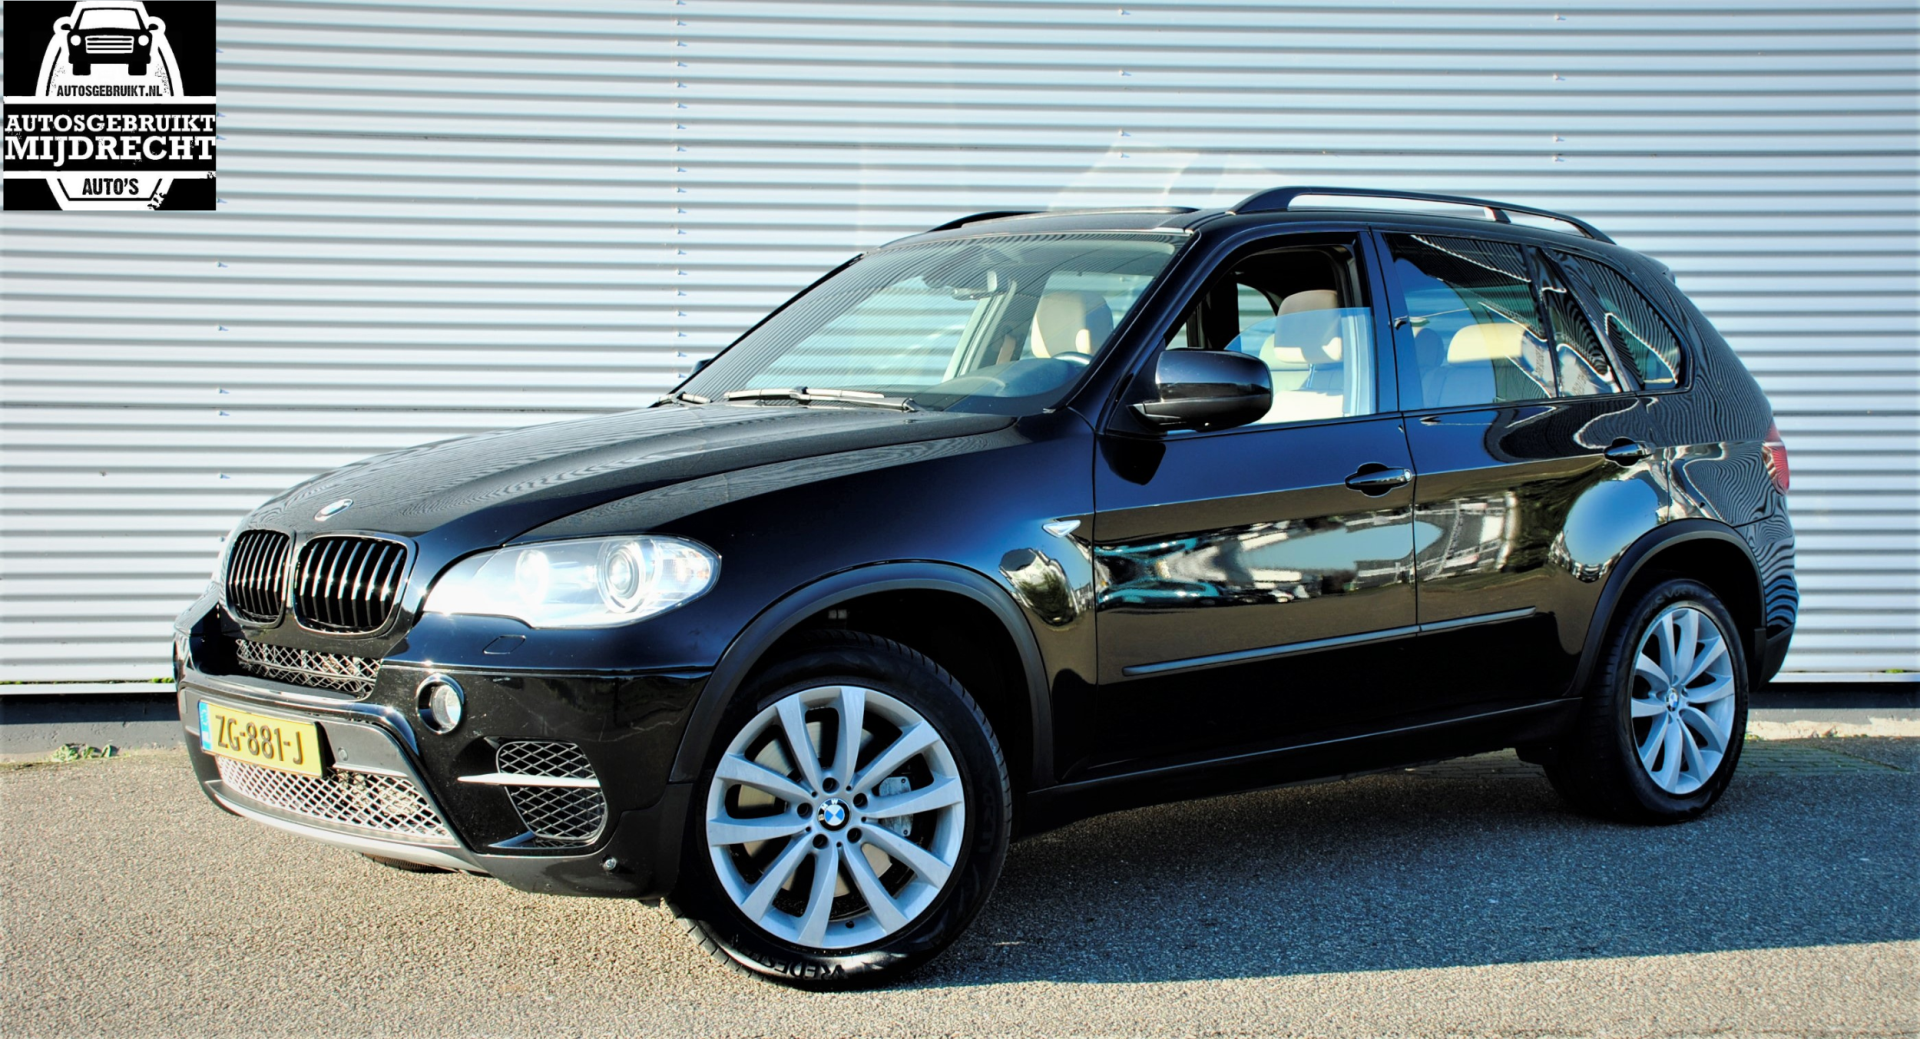 BMW X5 occasion - Autosgebruikt Mijdrecht